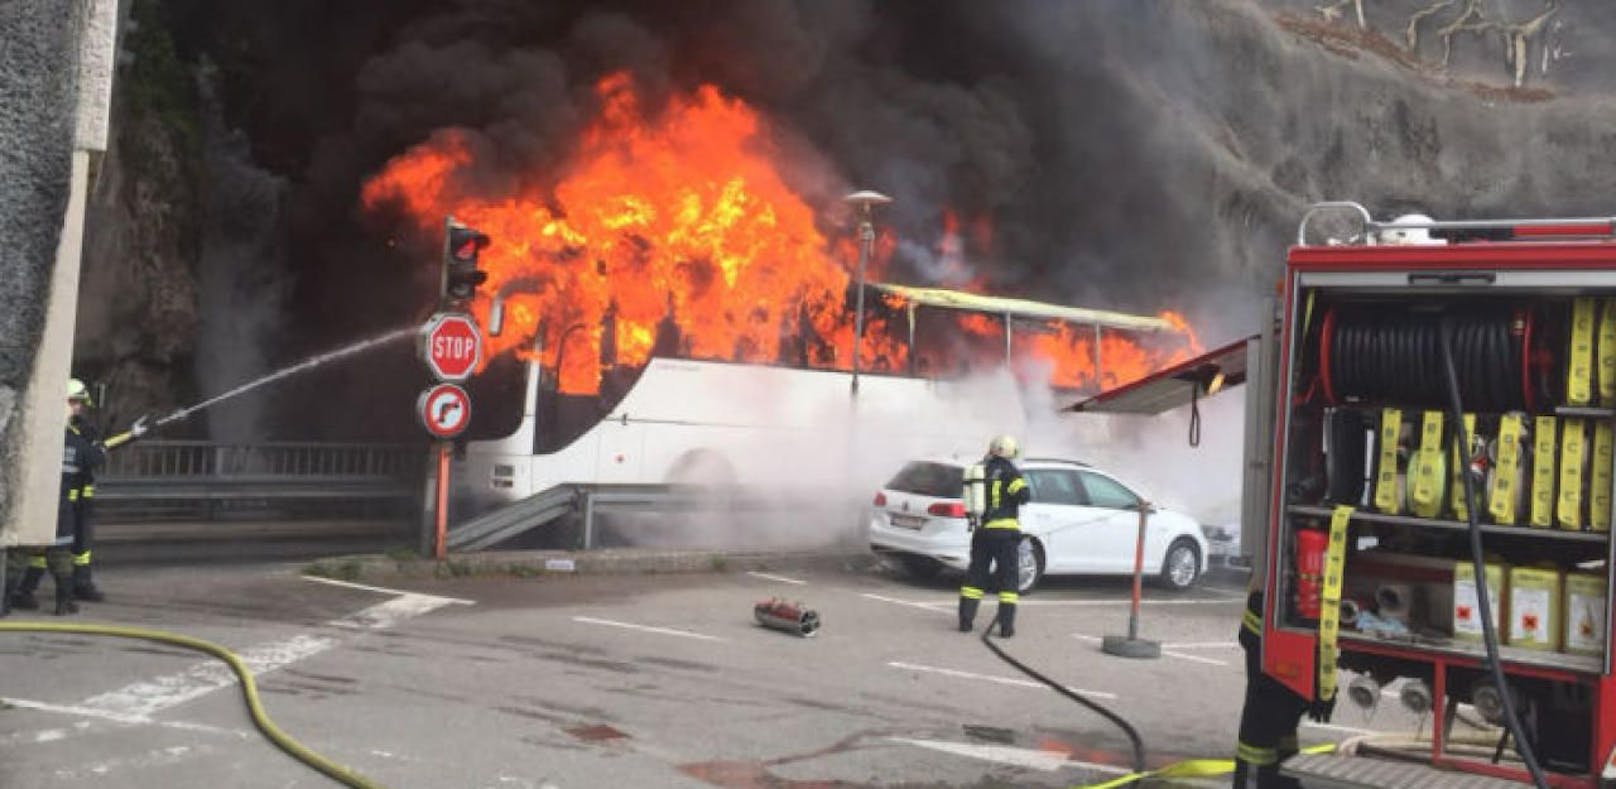 Lenker fährt brennenden Bus aus Tunnel